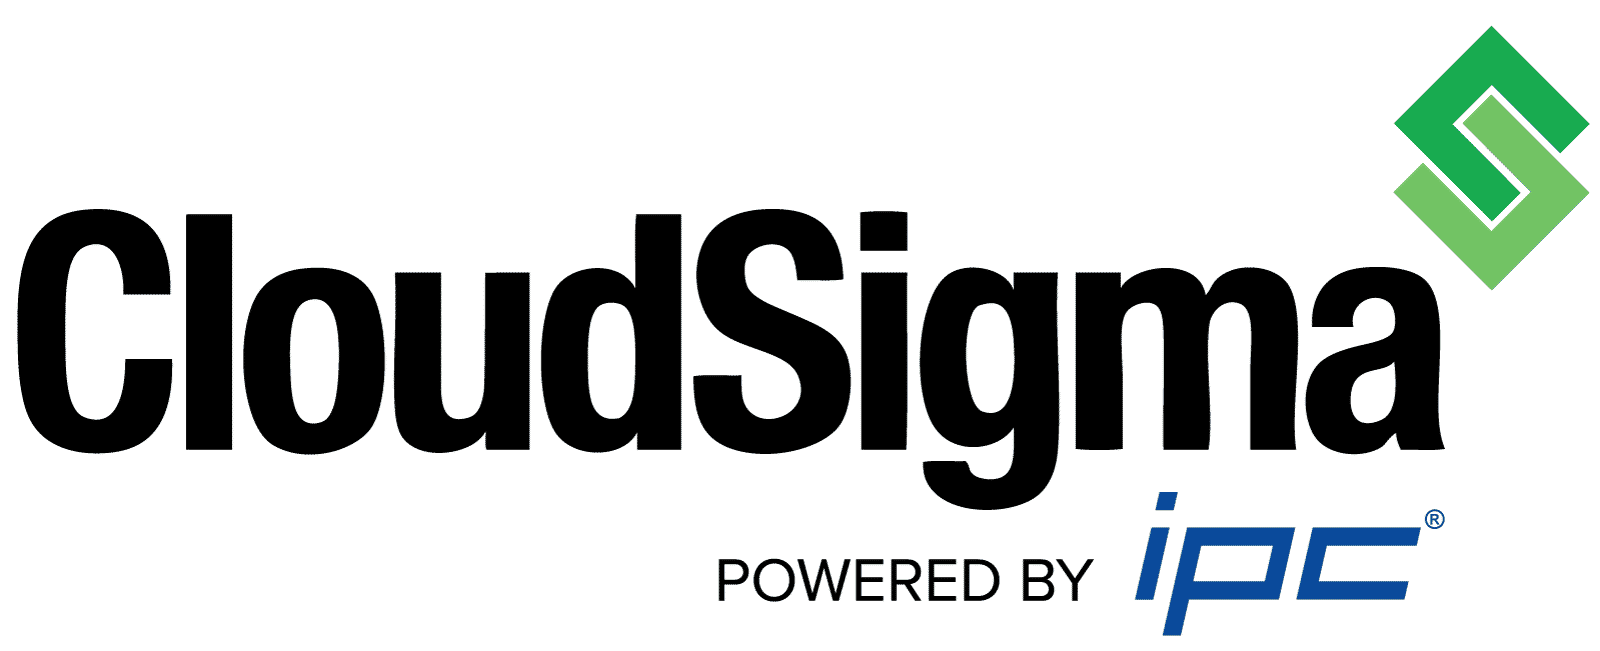 CloudSigma IPC Logo 2